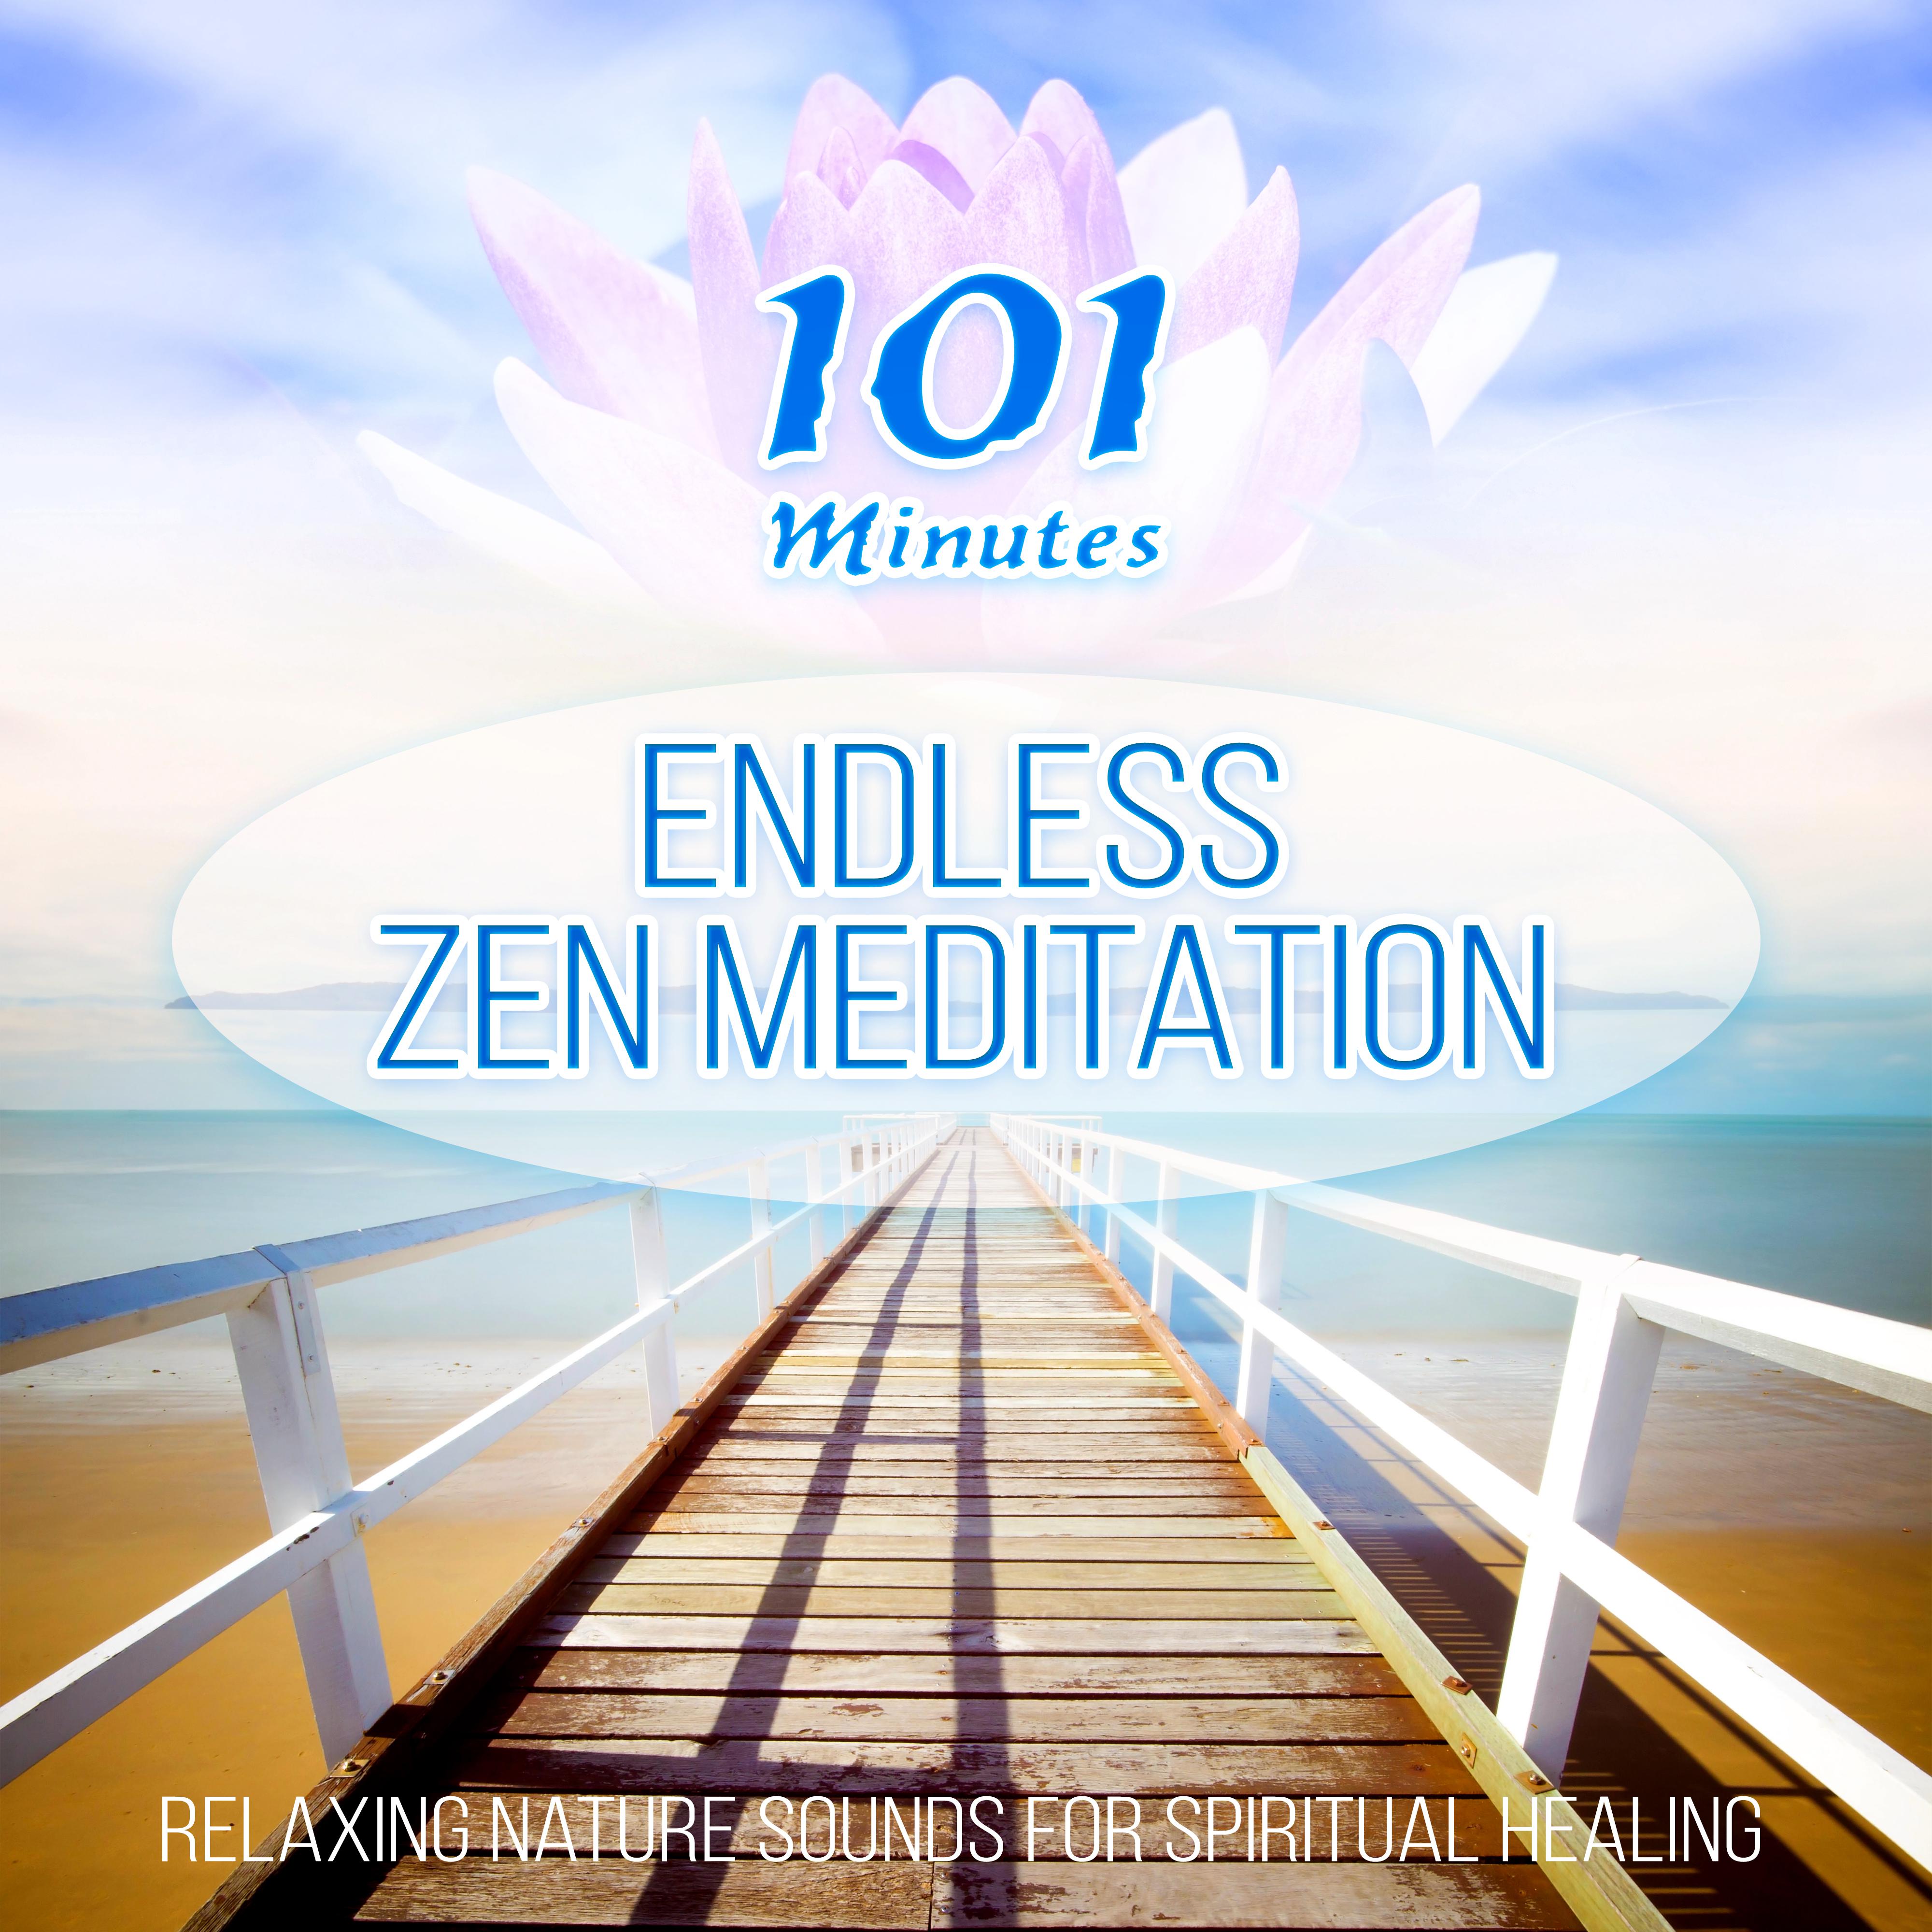 101 Minutes Endless Zen Meditation - Relaxing Nature Sounds for Spiritual Healing, Yoga, Reiki, Sleep